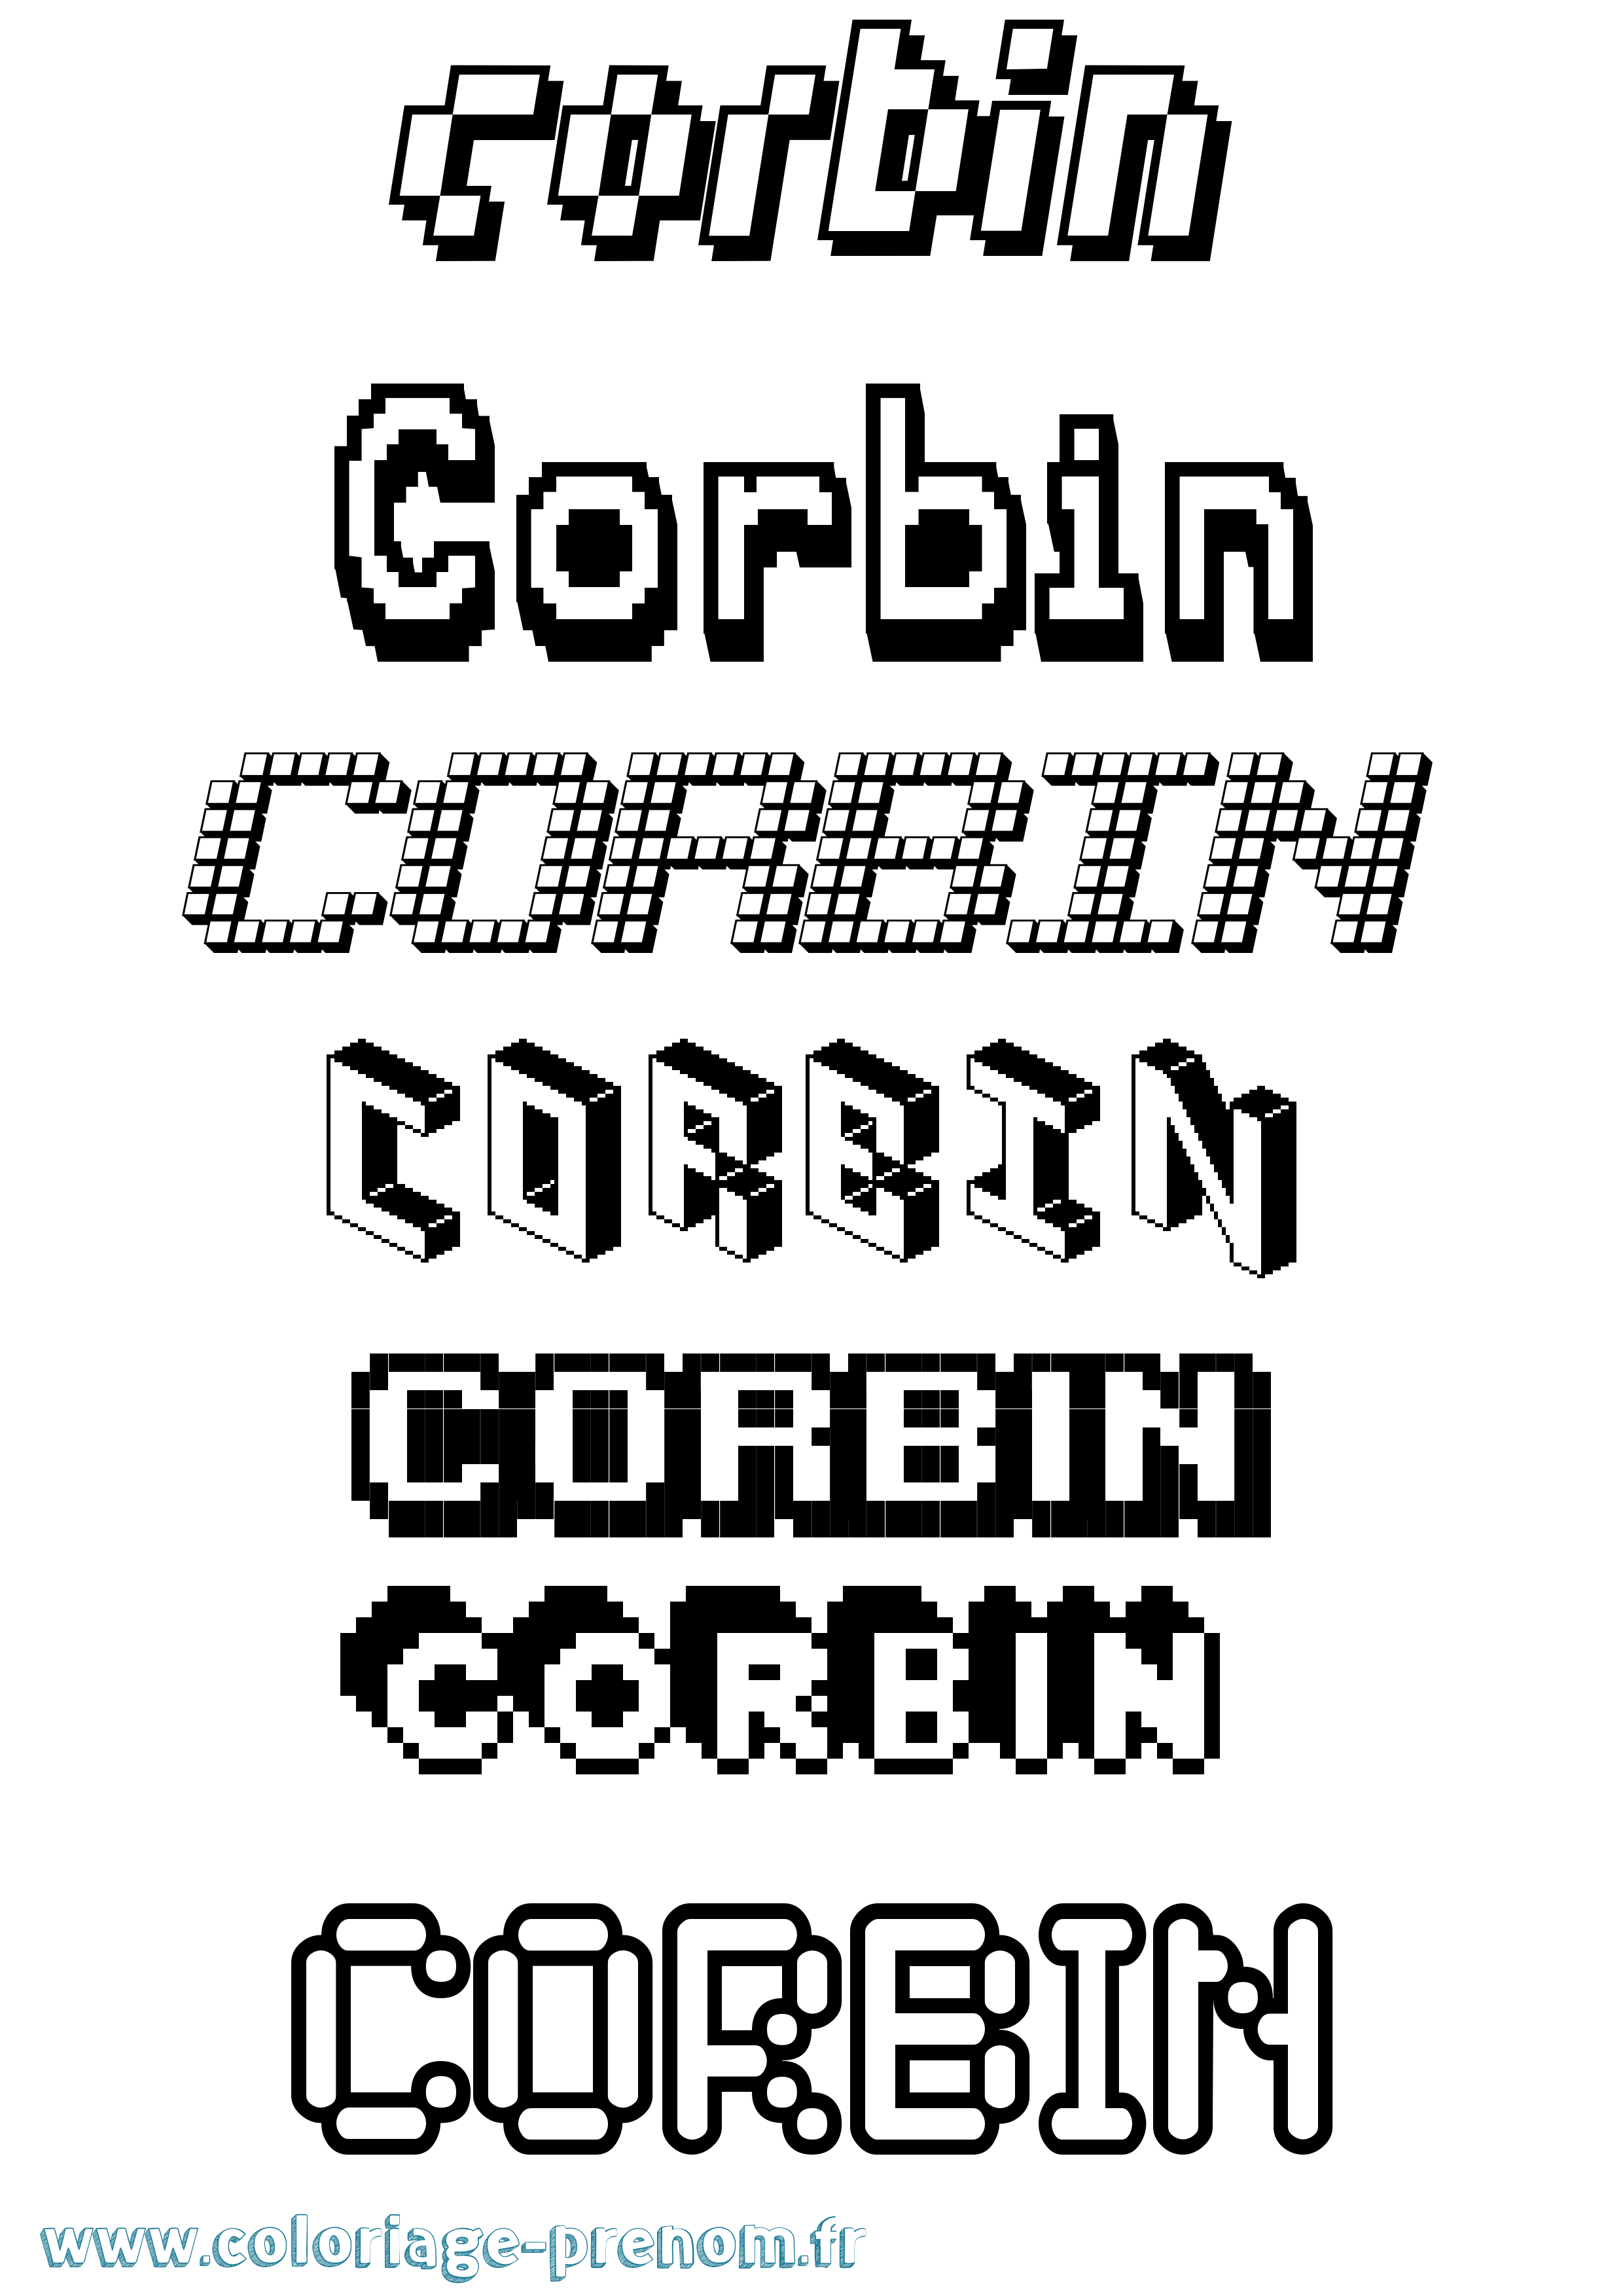 Coloriage prénom Corbin Pixel